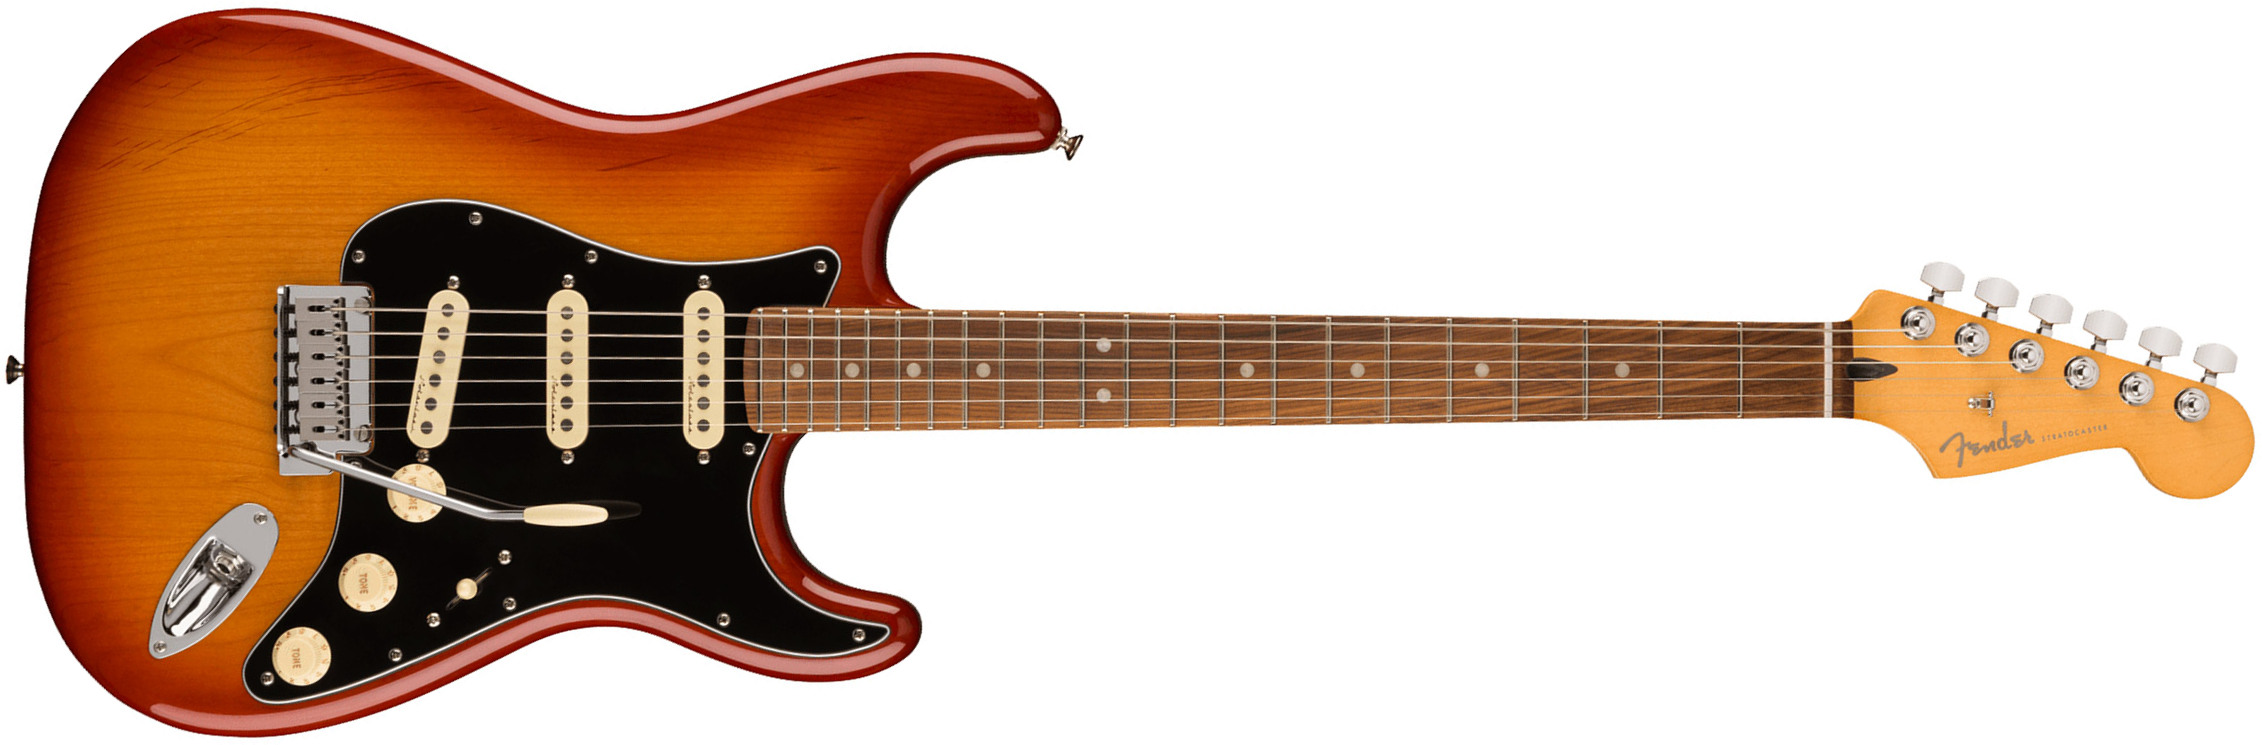 Fender Strat Player Plus Mex 2023 3s Trem Pf - Sienna Sunburst - Guitarra eléctrica con forma de str. - Main picture